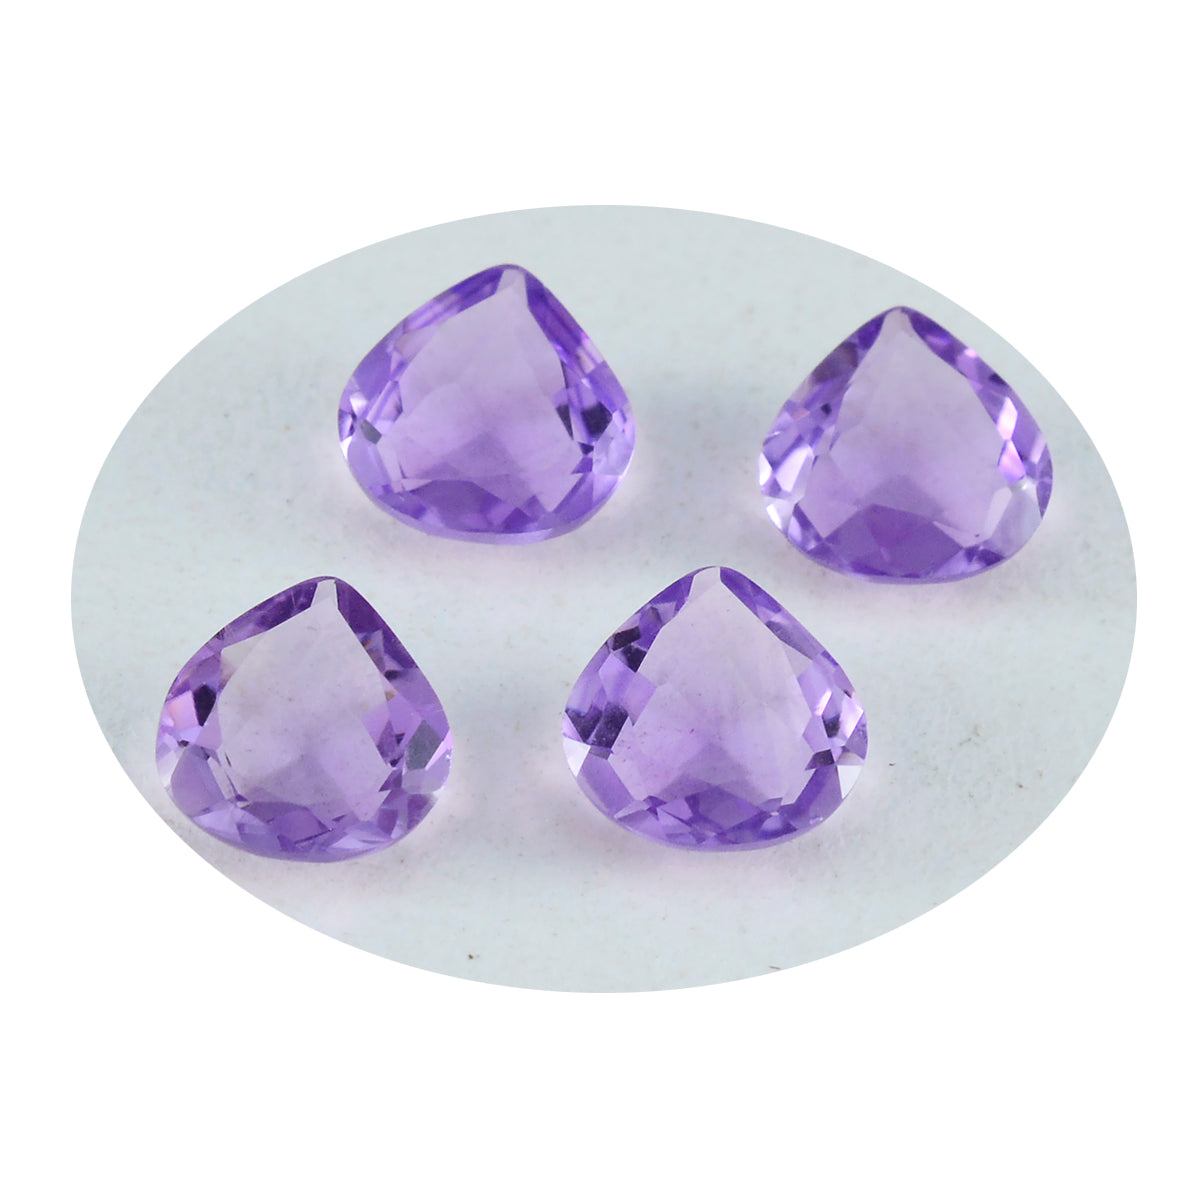 Riyogems 1PC Real Purple Amethyst Faceted 8X8 mm Heart Shape nice-looking Quality Loose Gem